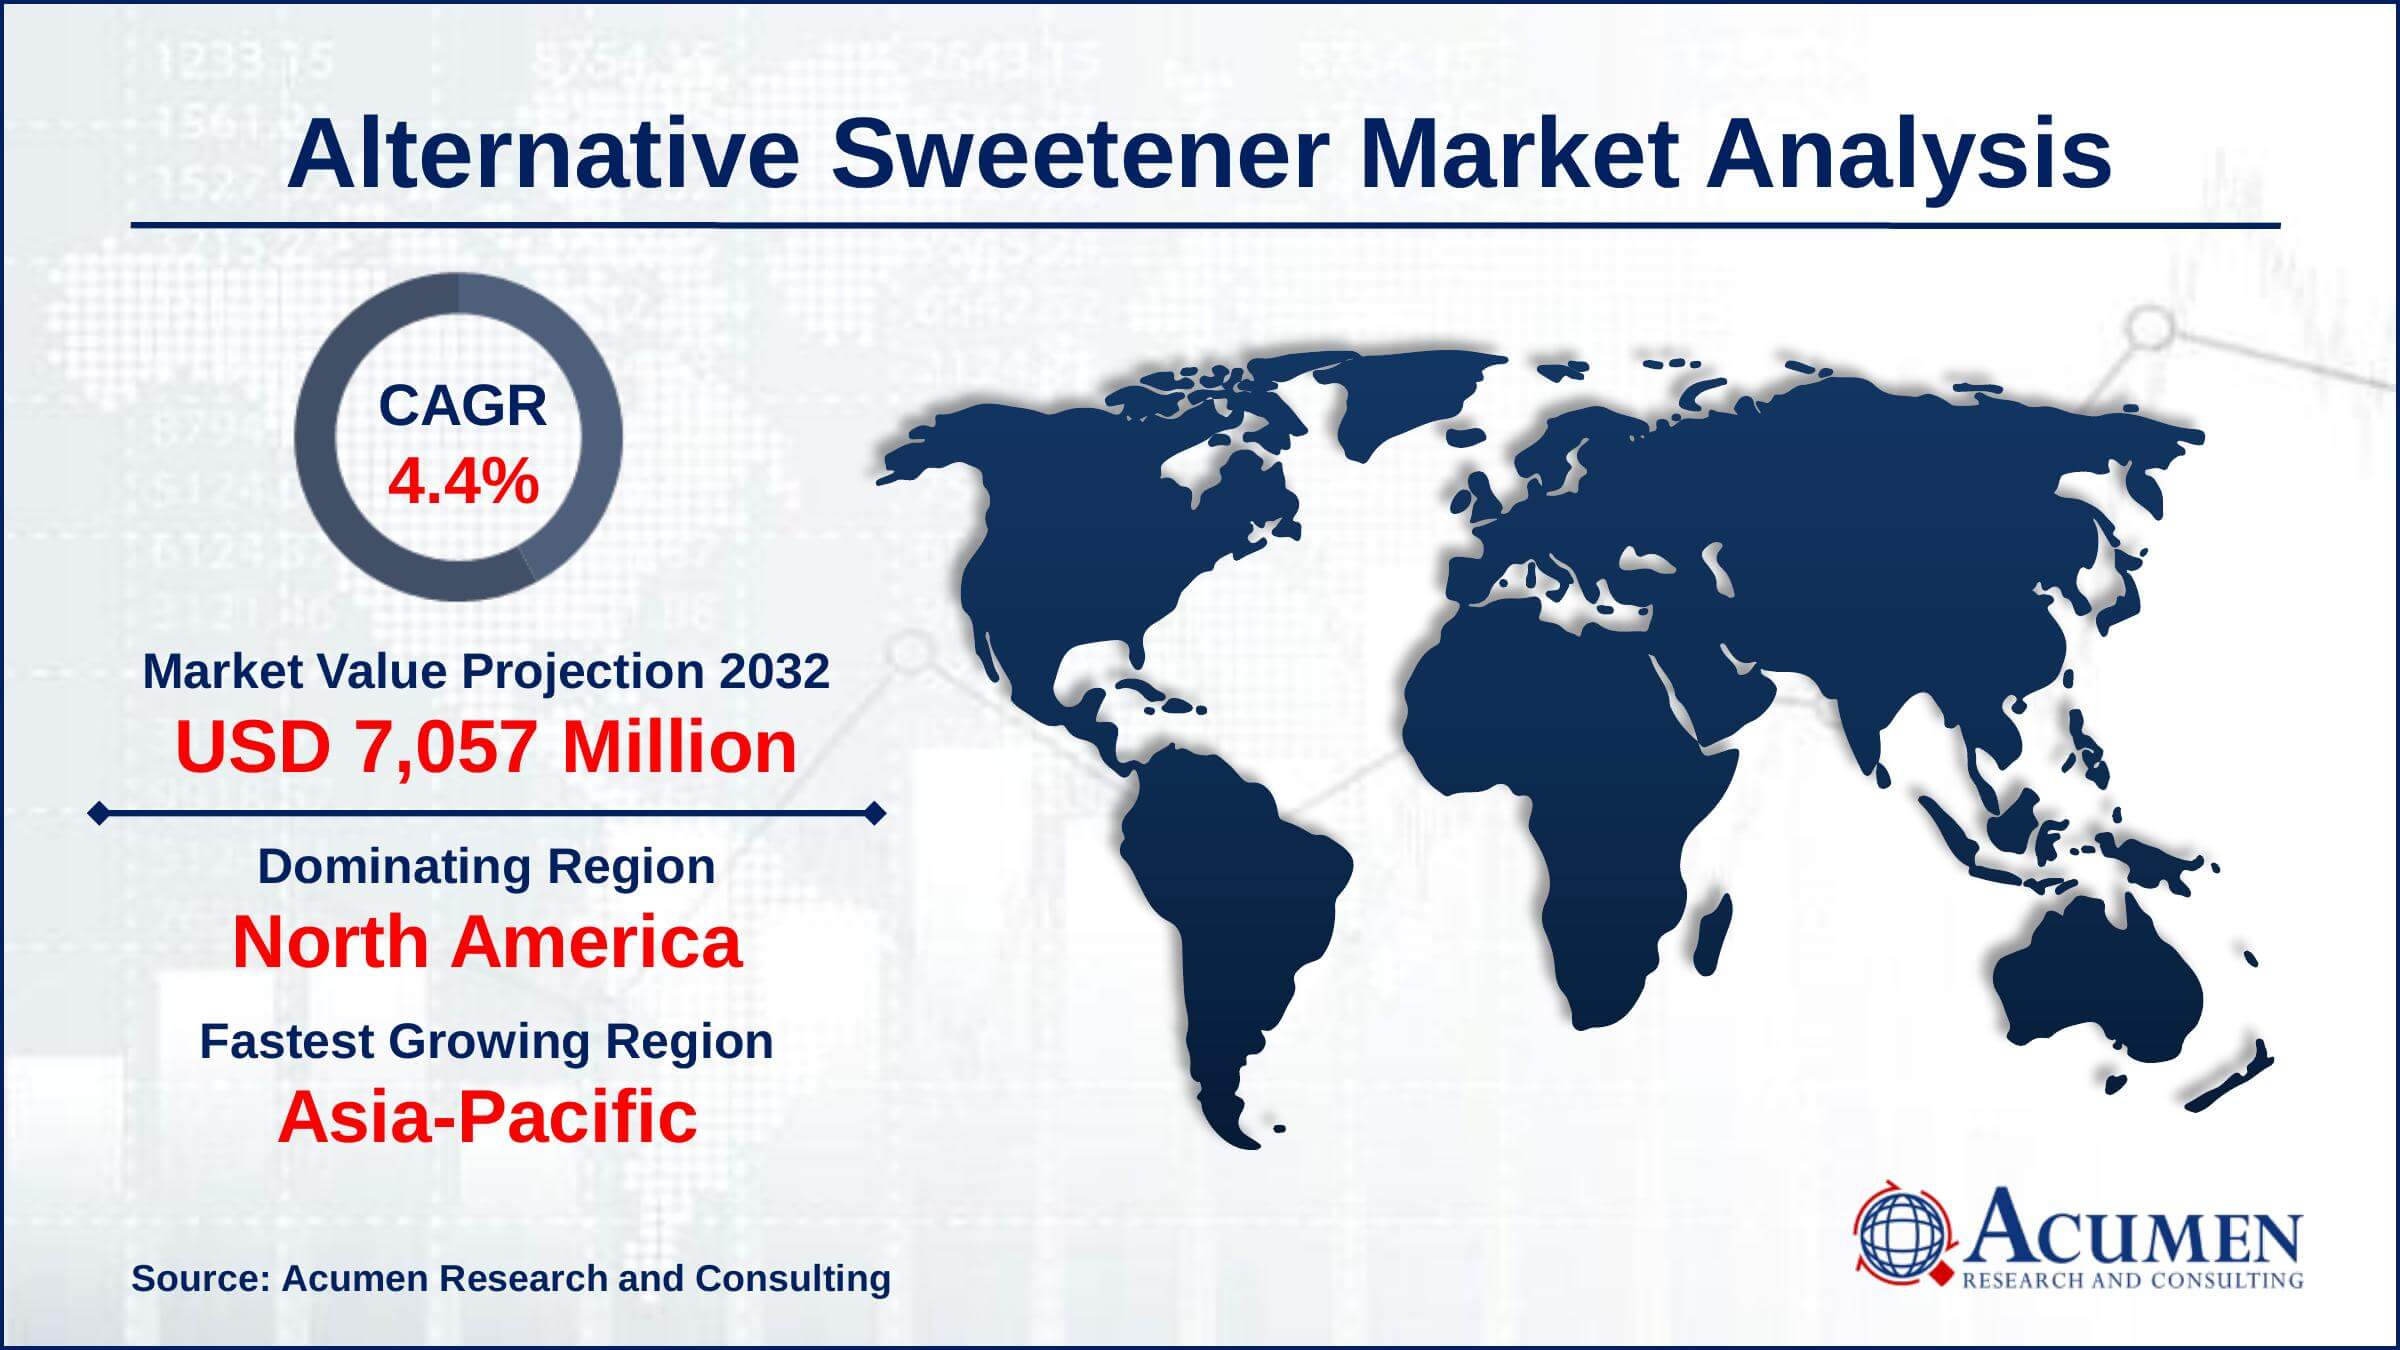 Global Alternative Sweetener Market Trends